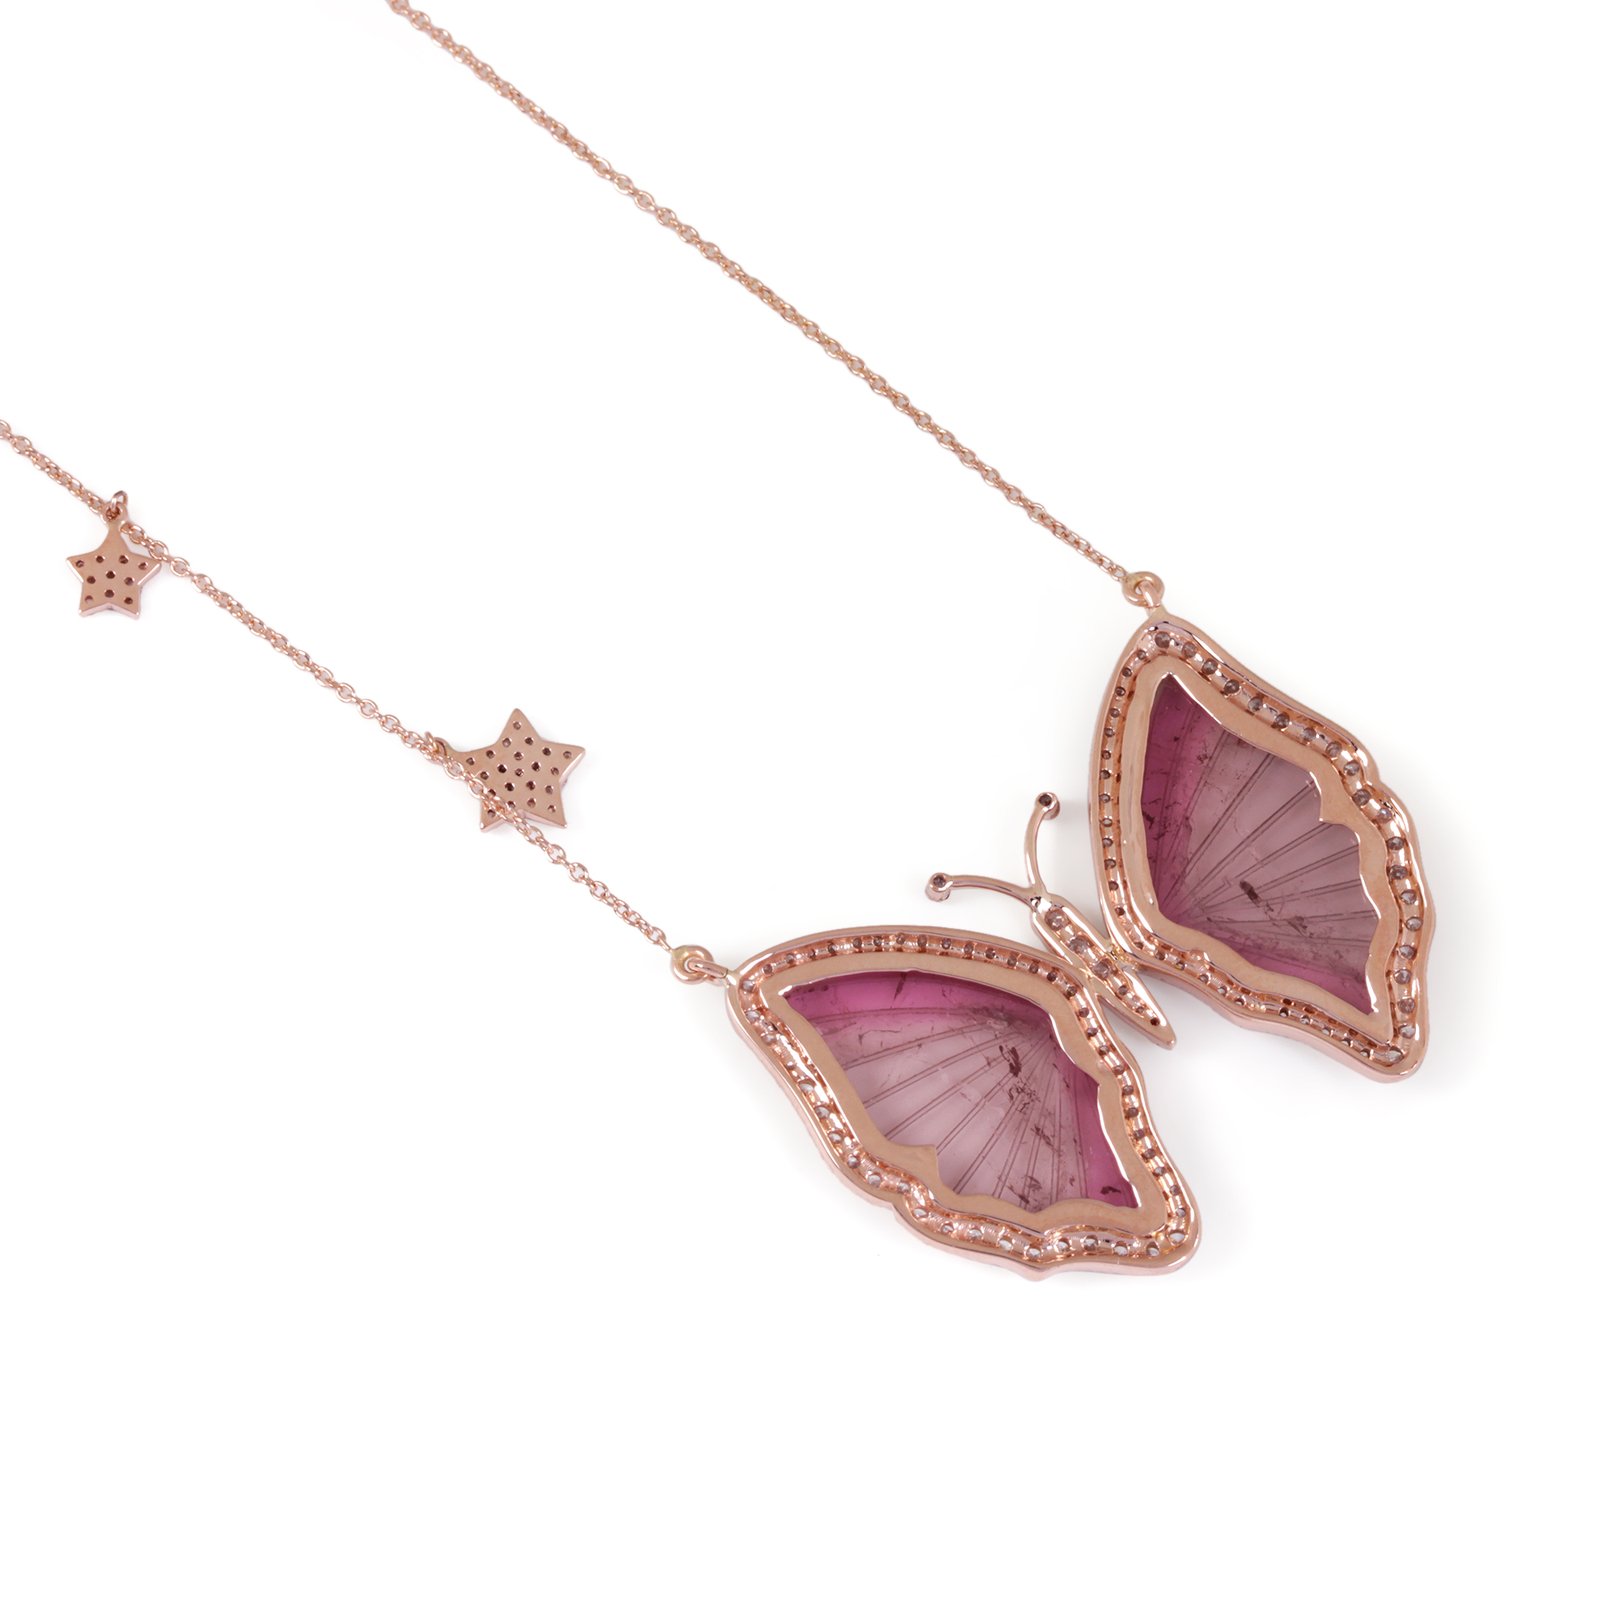 Pink Tourmaline 14K Solid Gold Pendant Necklace Pave Diamond Jewelry